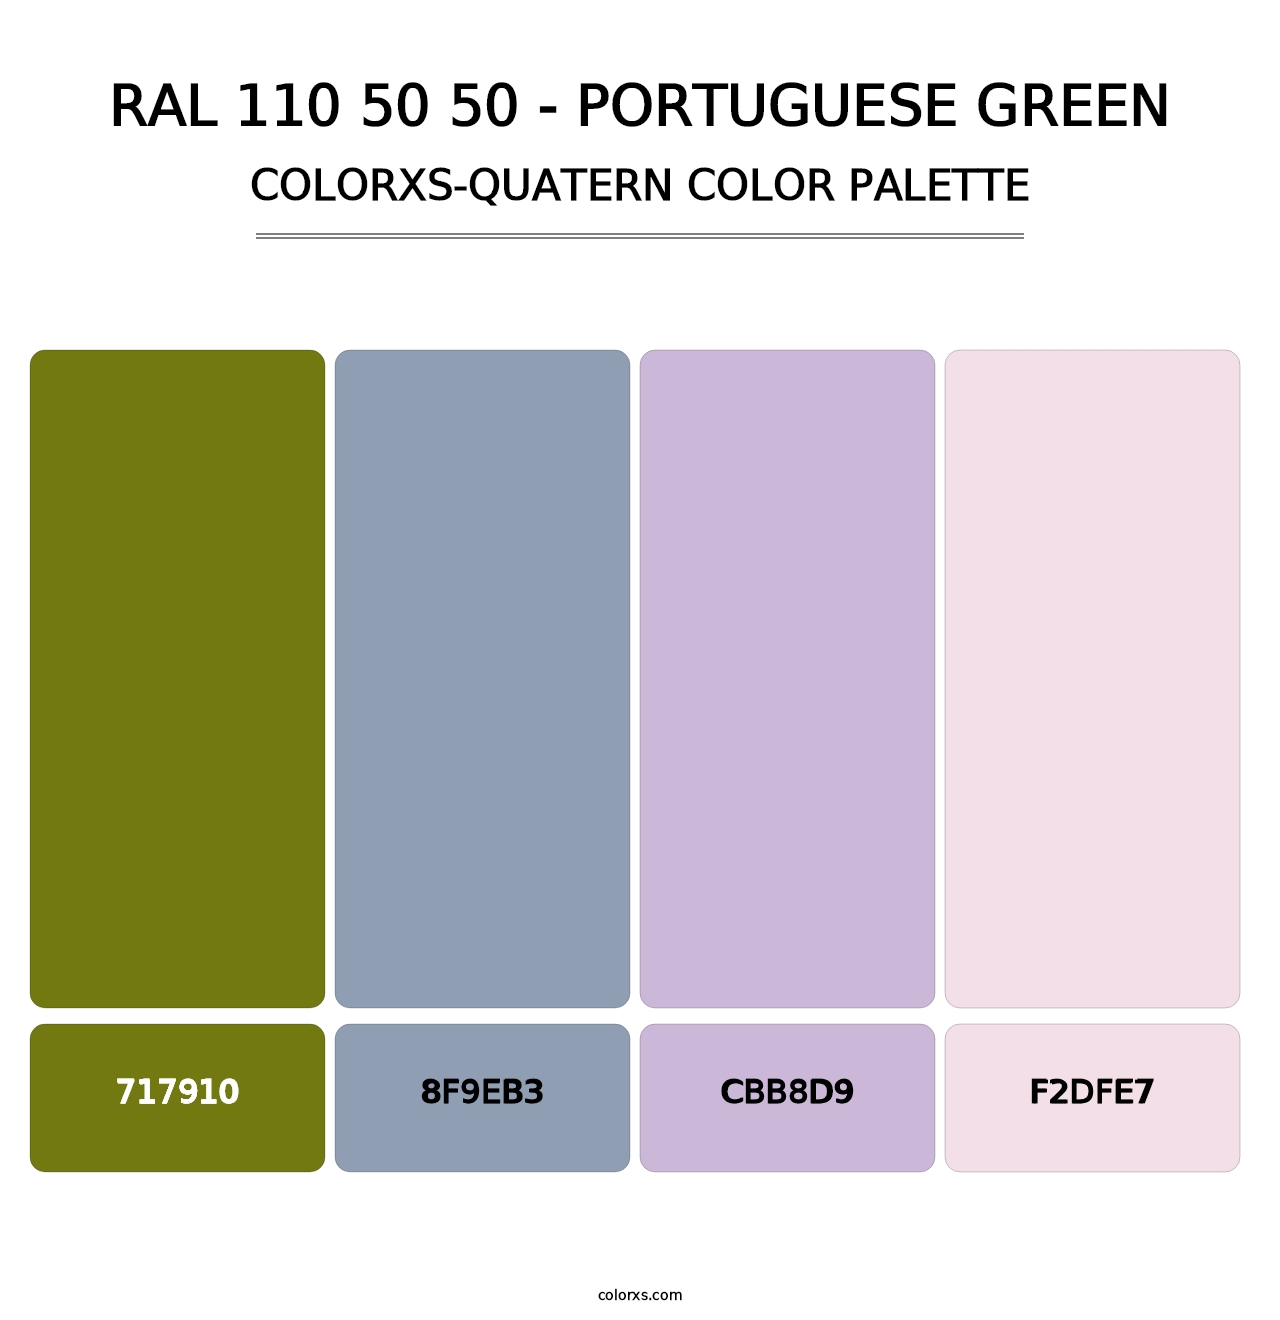 RAL 110 50 50 - Portuguese Green - Colorxs Quatern Palette